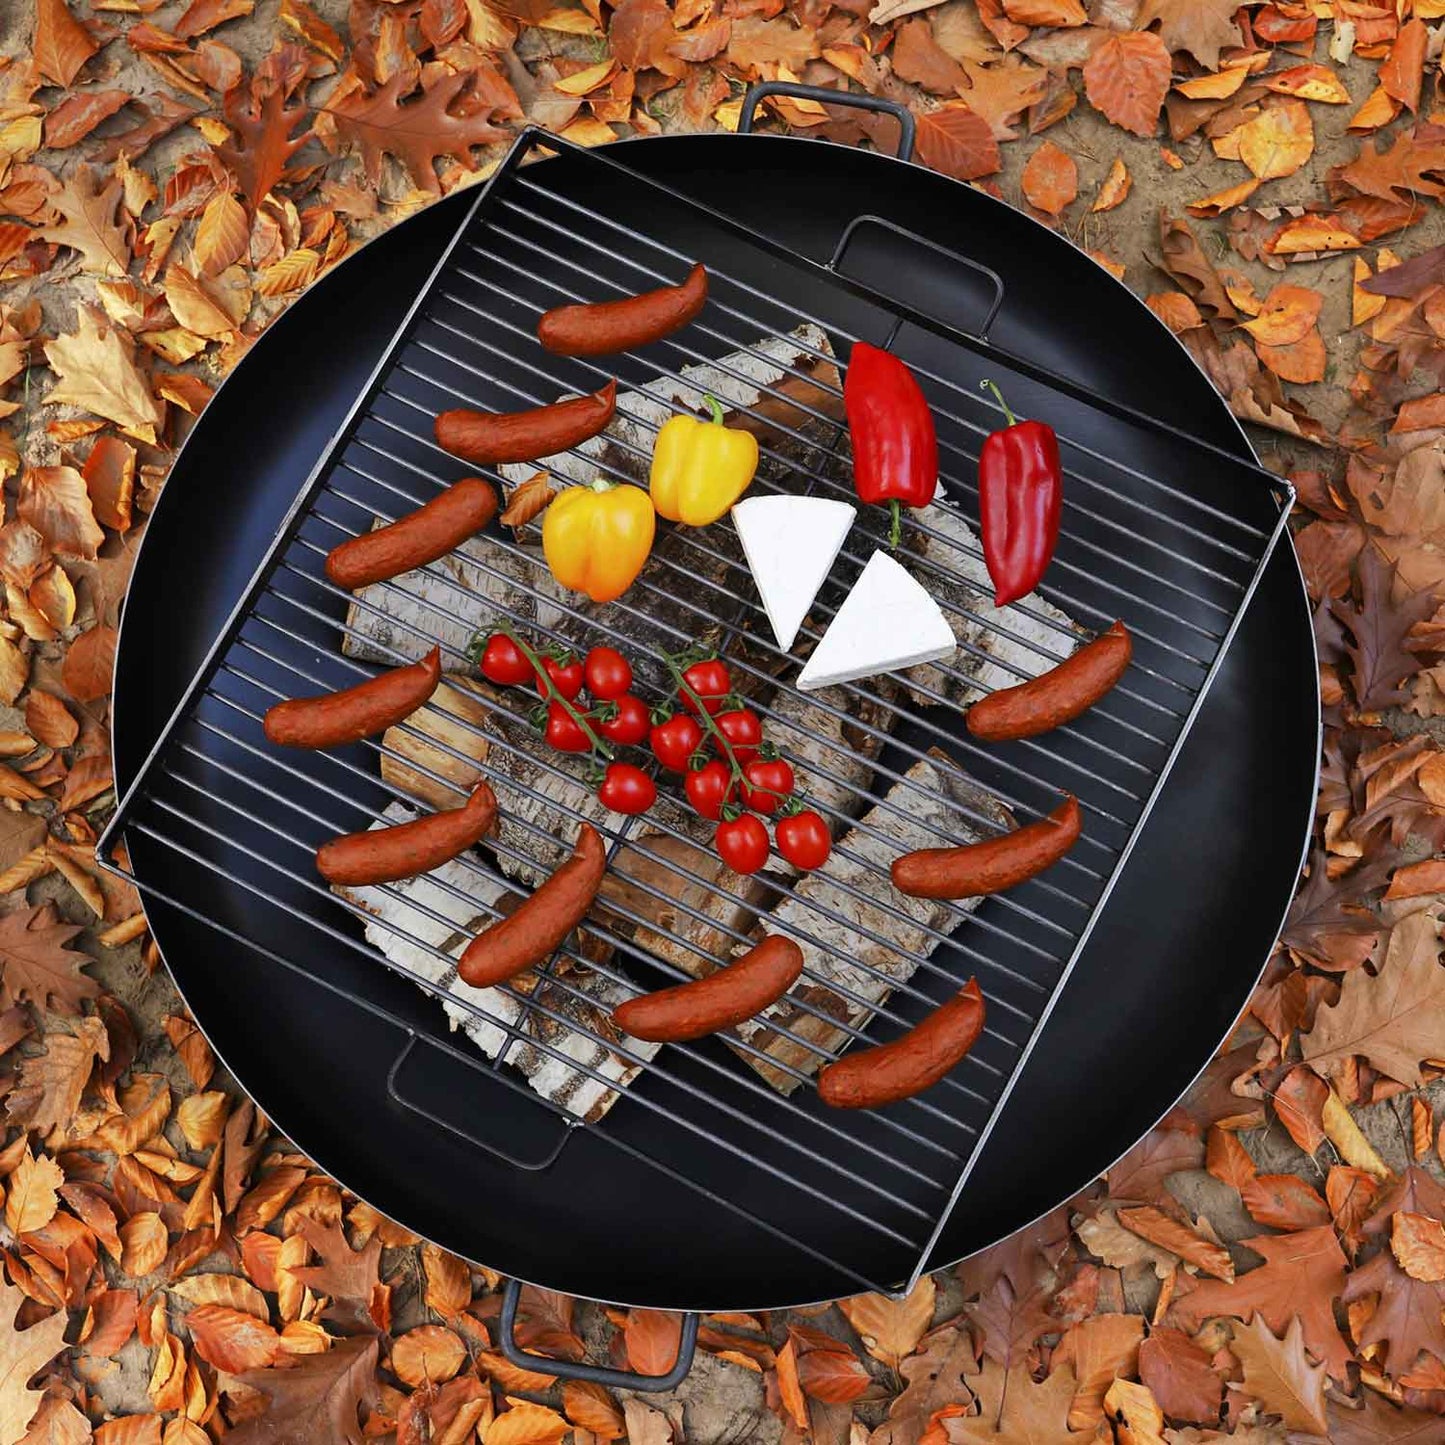 Cook King - Grille de barbecue, Barbecue, Grill en acier brut pour foyer, 4